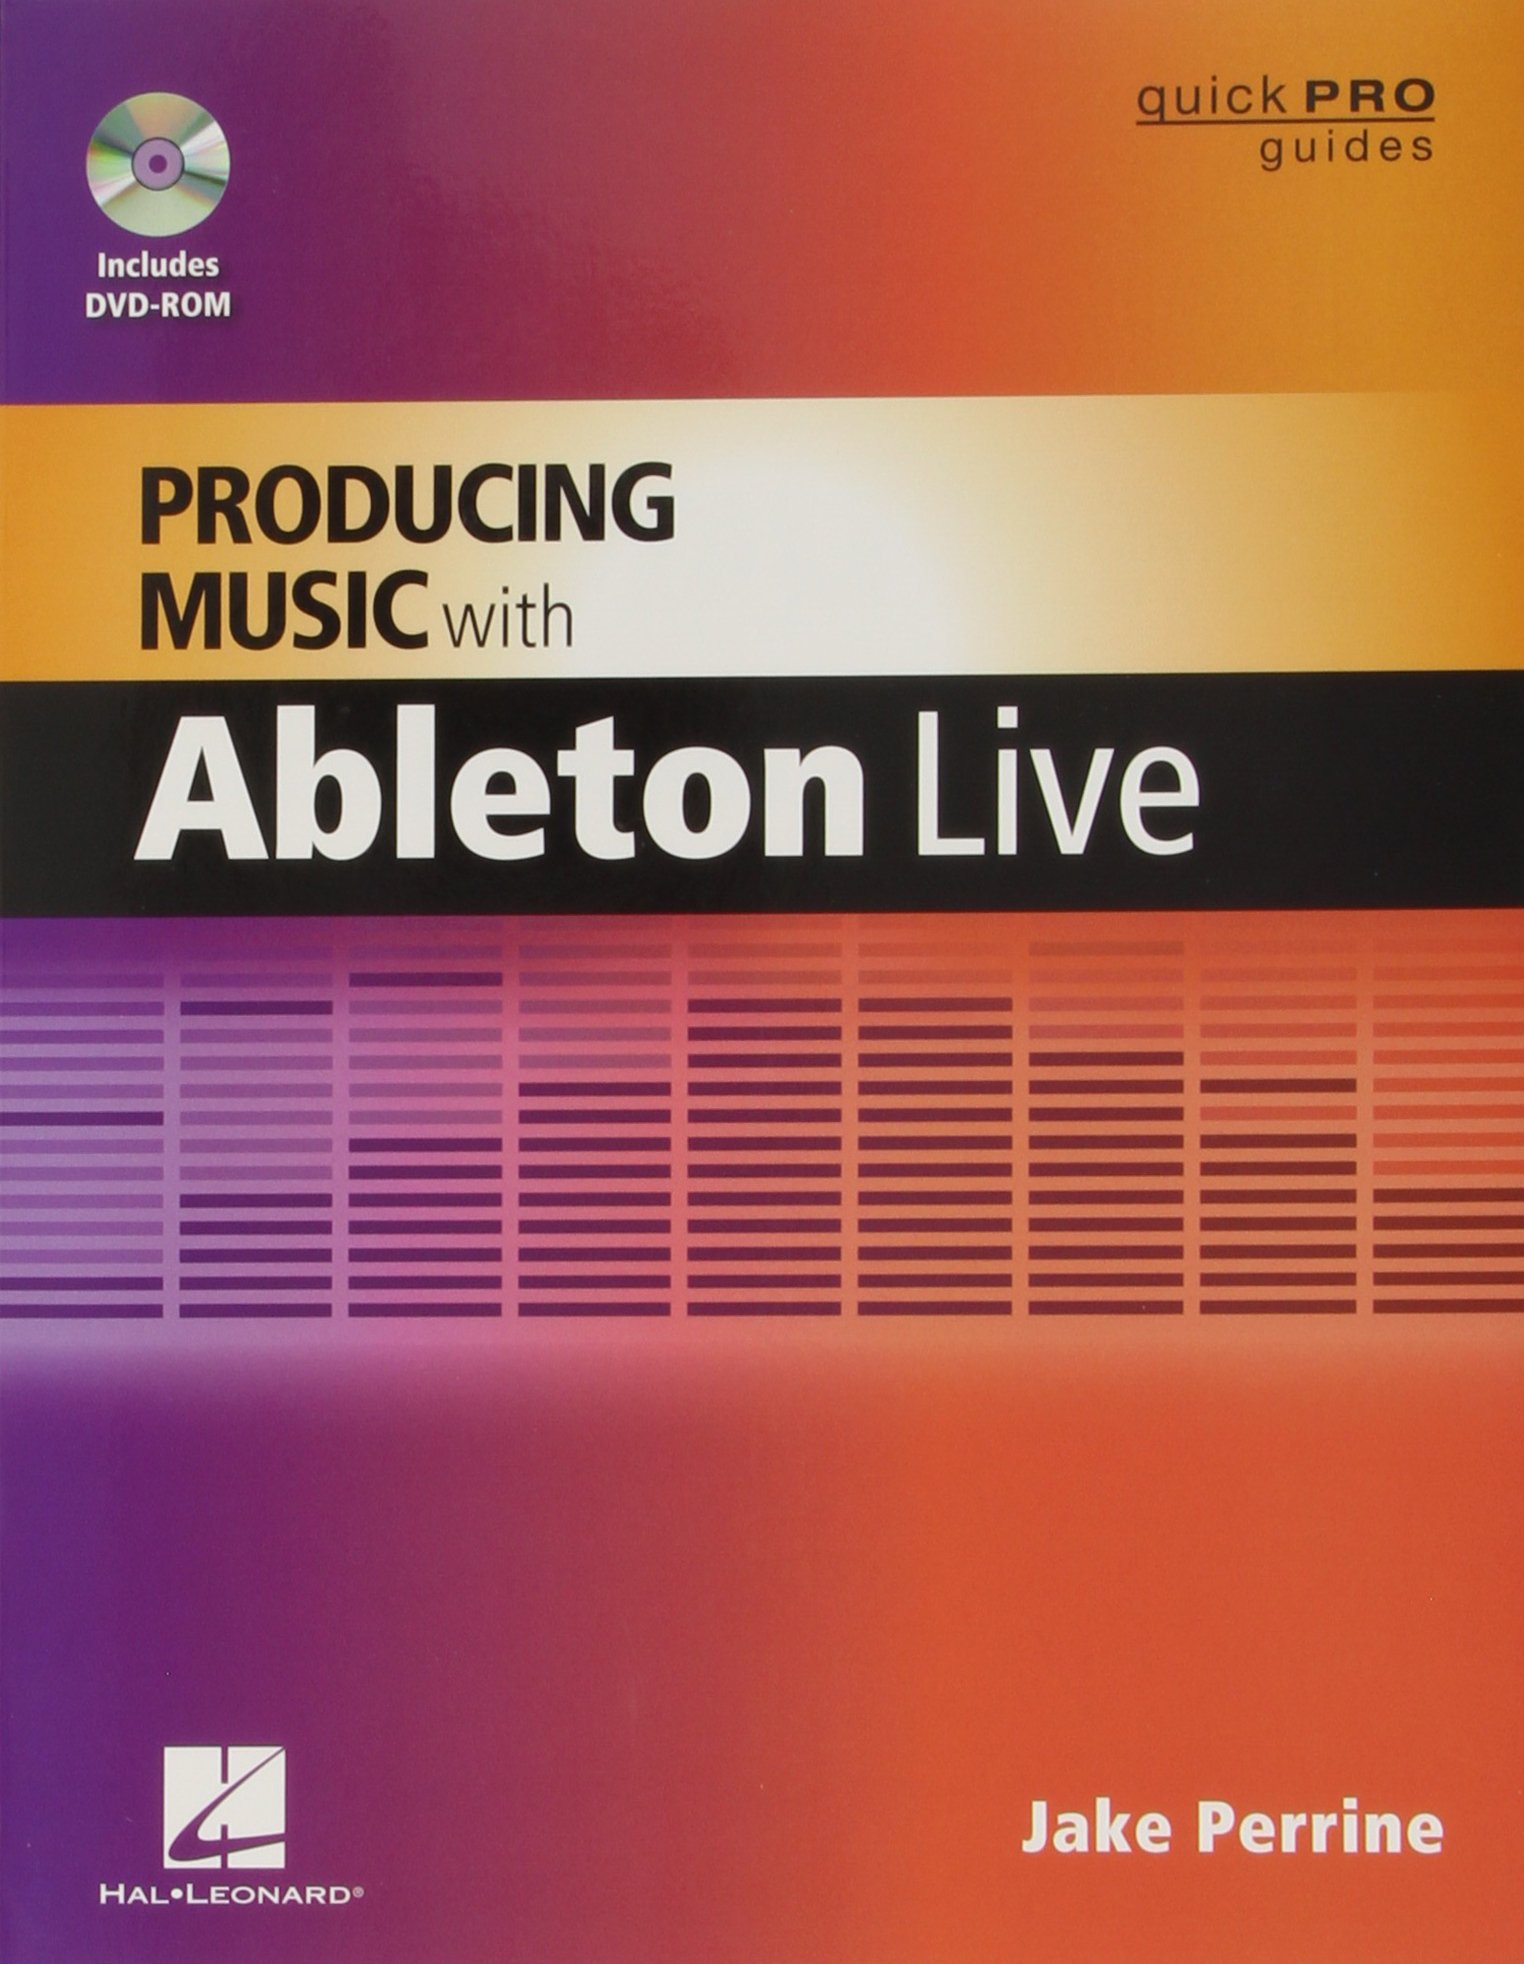 Ableton book pdf download free by stephen king